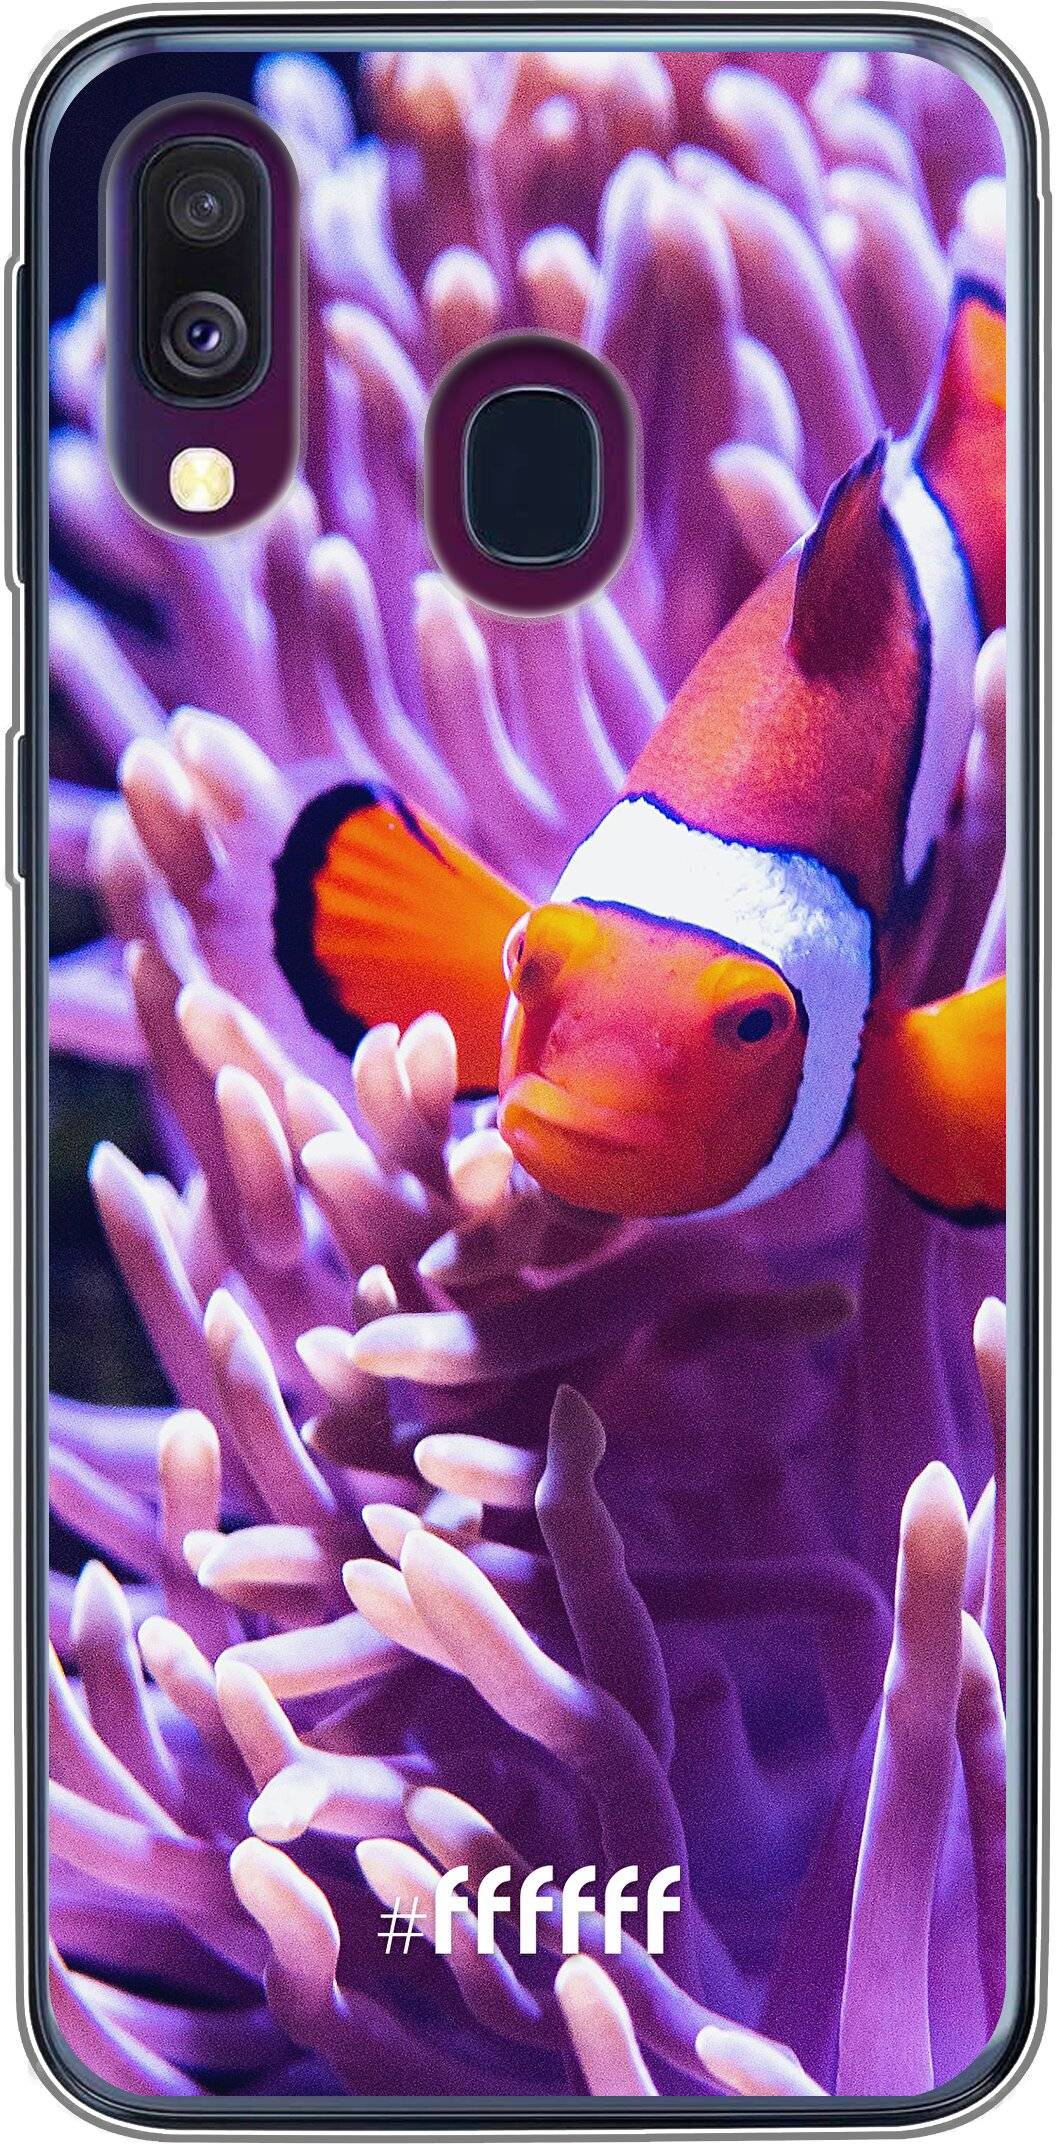 Nemo Galaxy A40